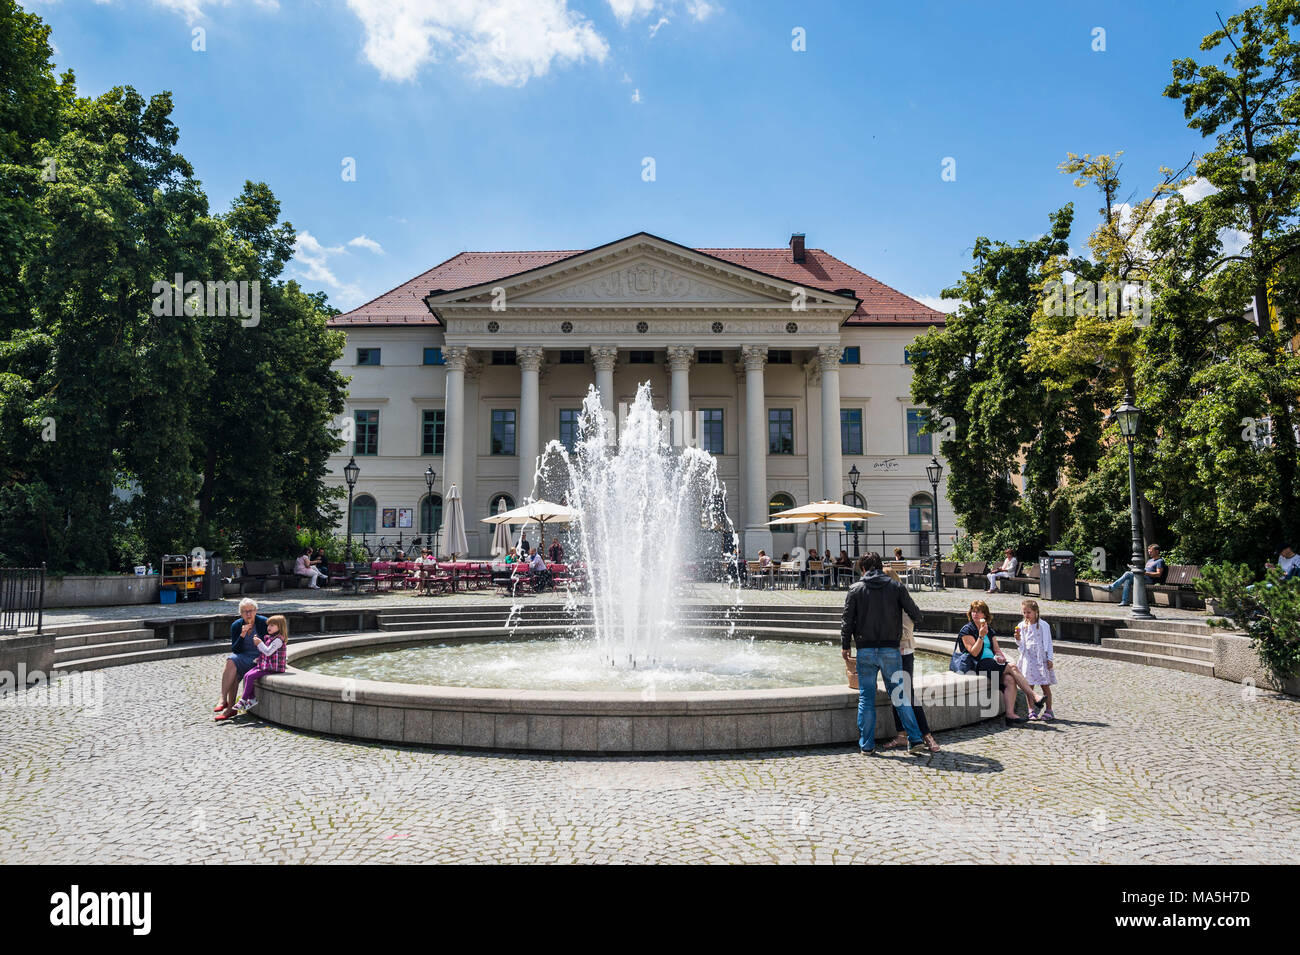 Fontana e la Präsidialpalais (PresidentialPalace), patrimonio mondiale dell'Unesco, Regensburg, Baviera, Germania Foto Stock